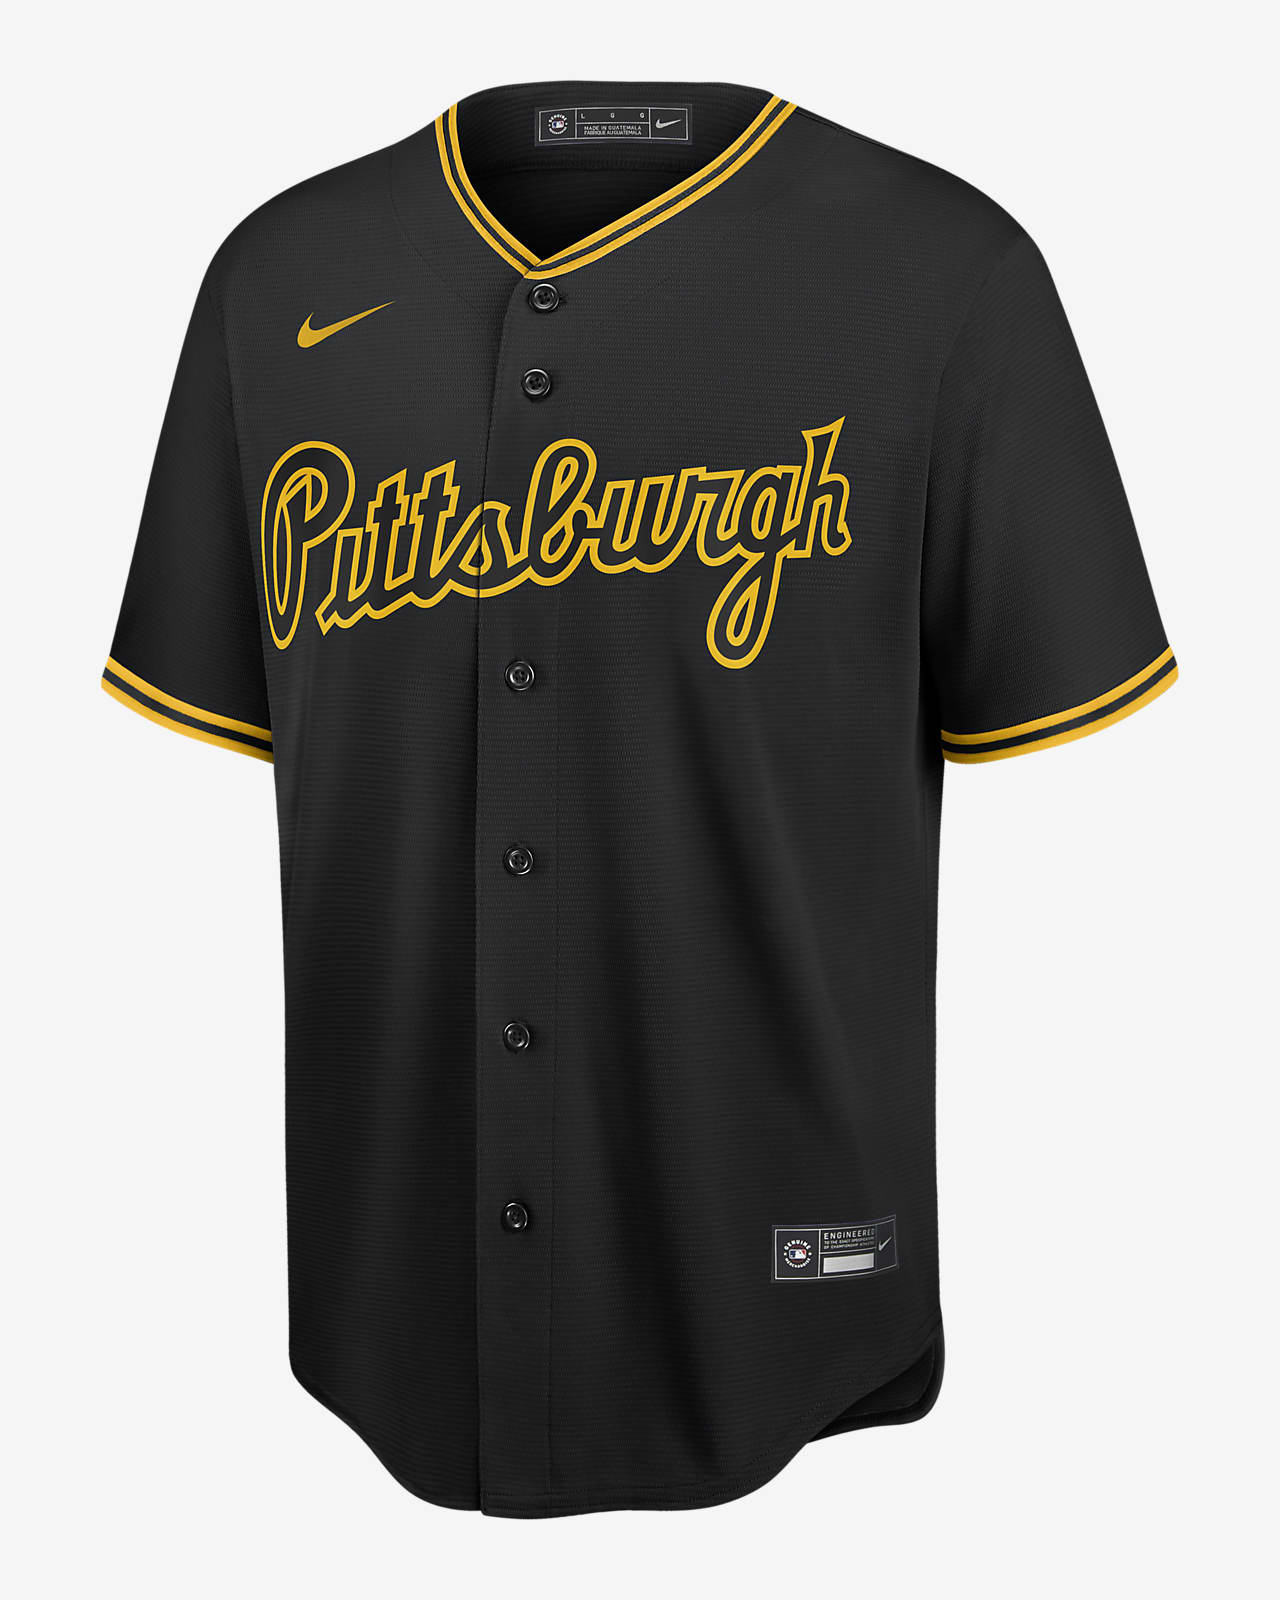 MLB Pittsburgh Pirates Men's Replica Baseball Jersey